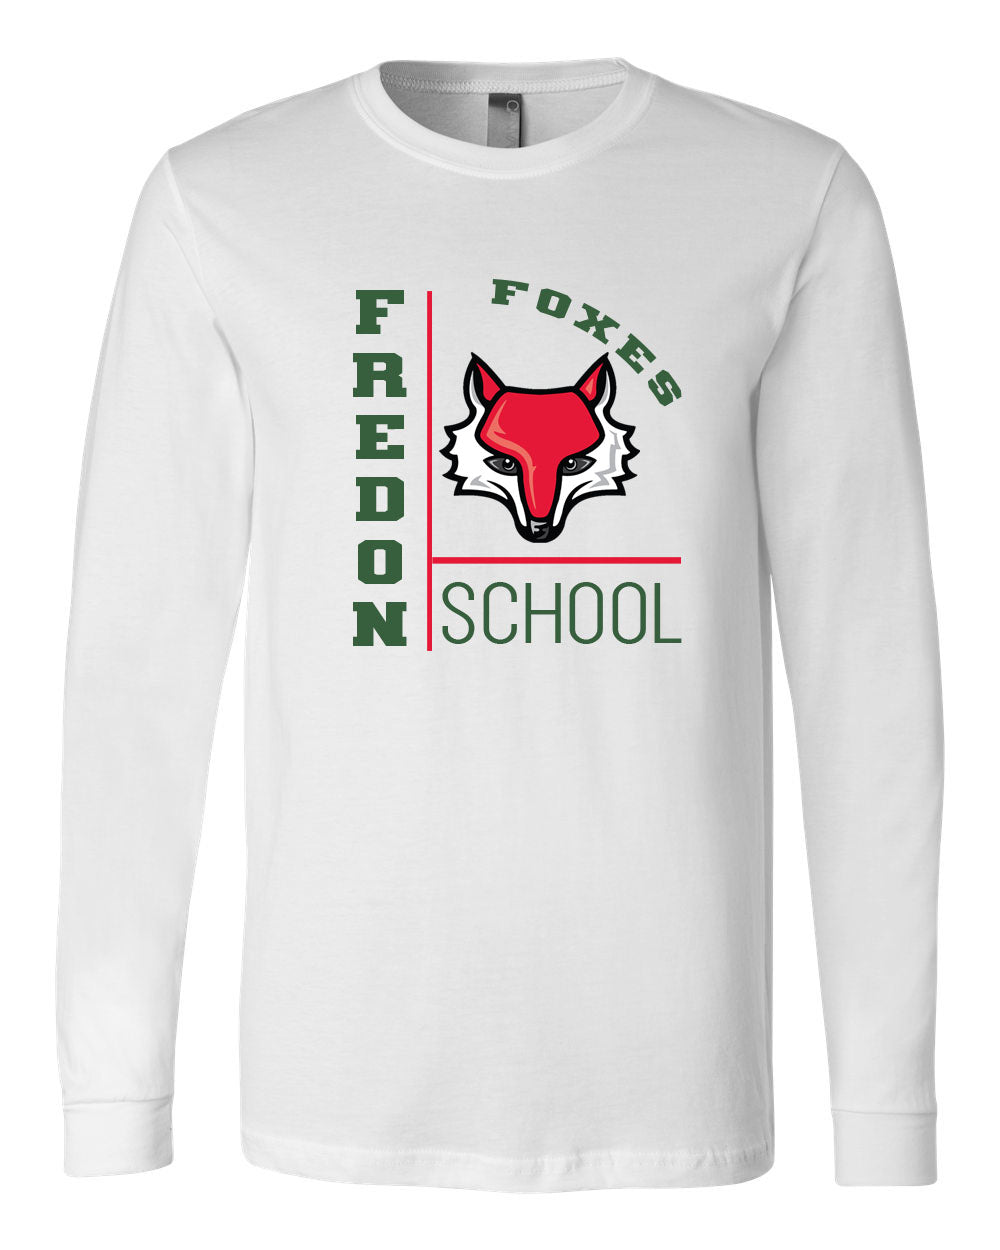 Fredon Design 2 Long Sleeve Shirt